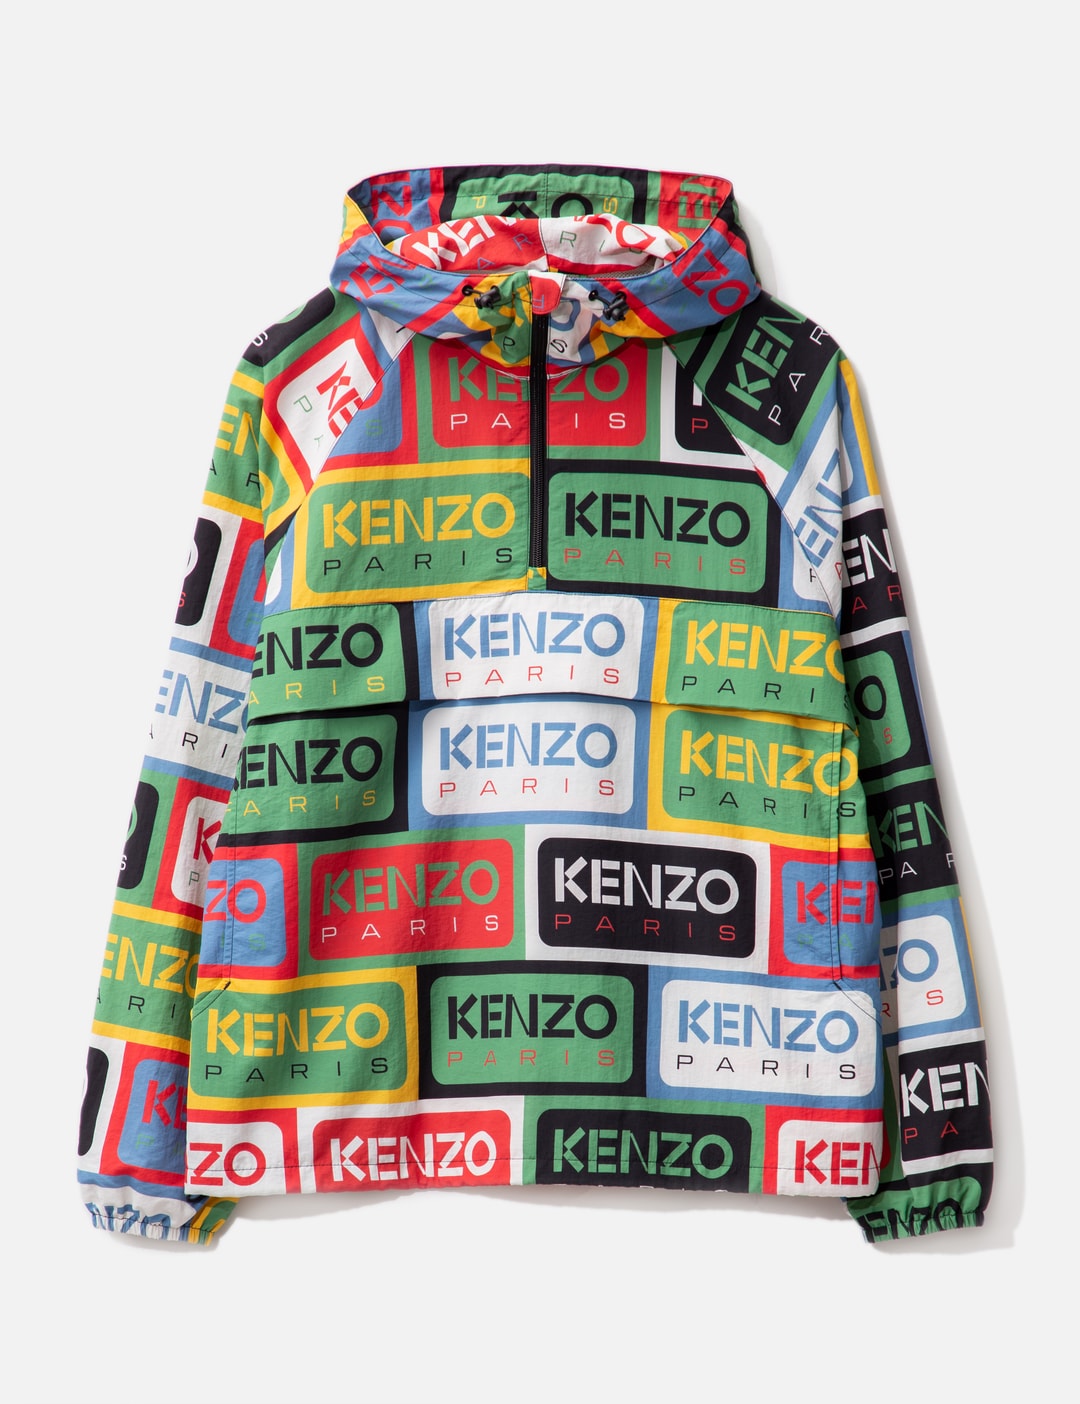 Kenzo - KENZO Labels Windbreaker | HBX - Globally Curated Fashion and ...